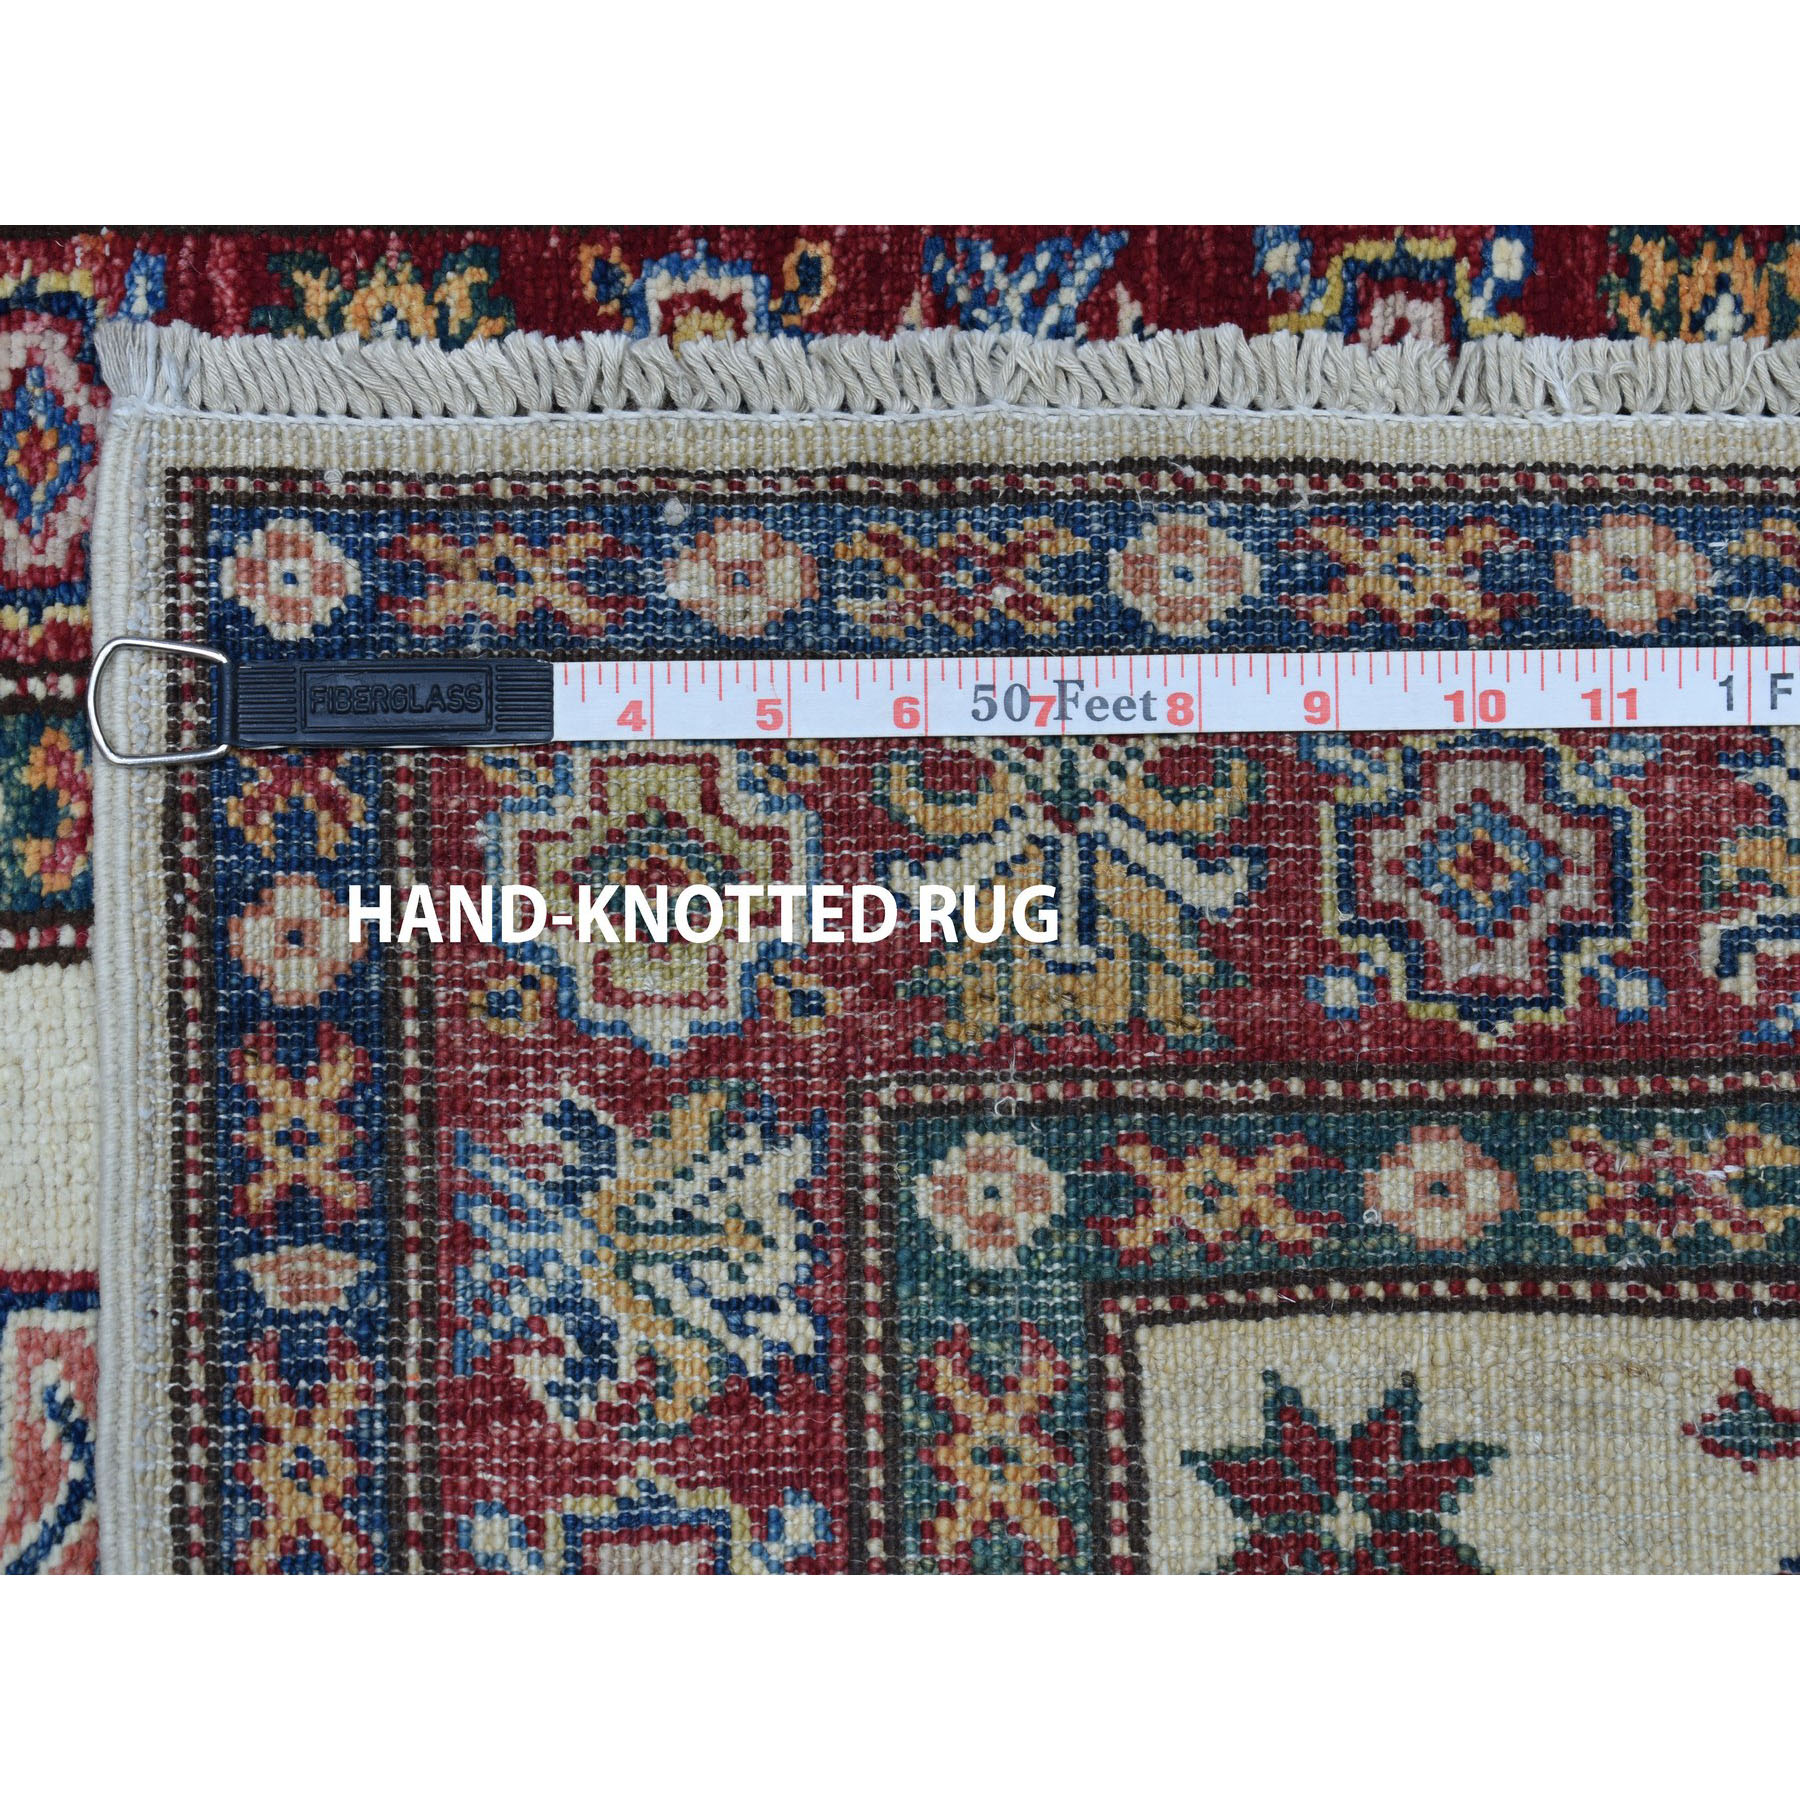 2'9"x19' Ivory Super Kazak Geometric Design XL Runner Pure Wool Hand Woven Oriental Rug 